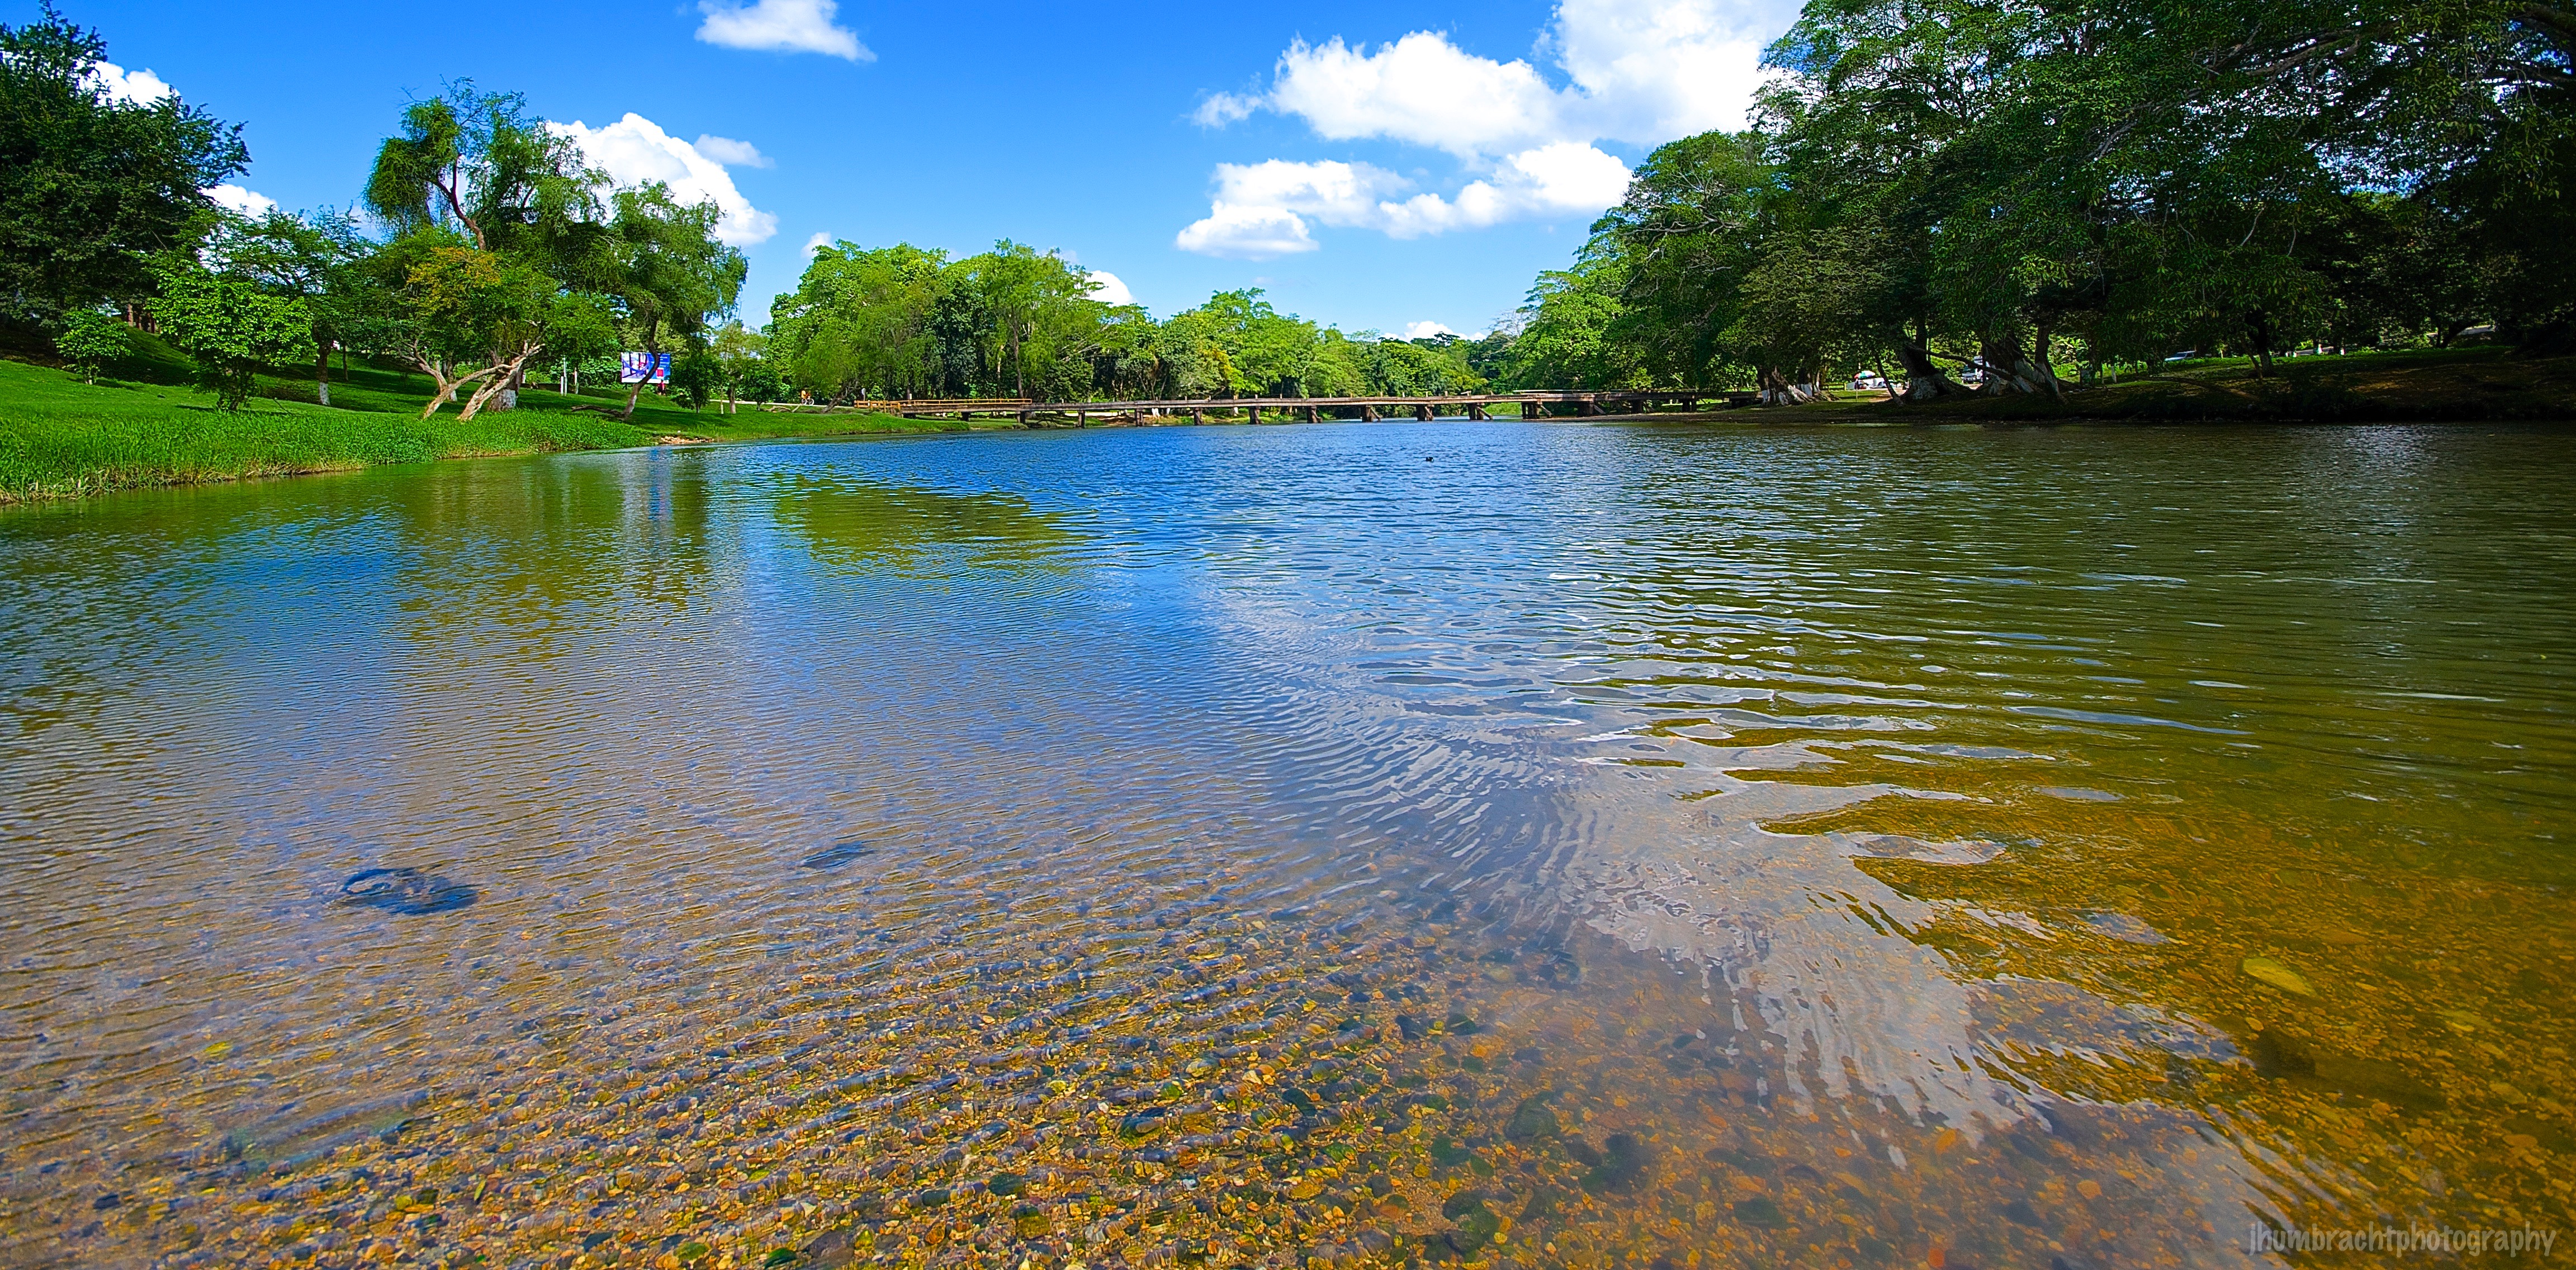 Macal River | San Ignacio, Belize | Image By Indiana Architectural Photographer Jason Humbracht